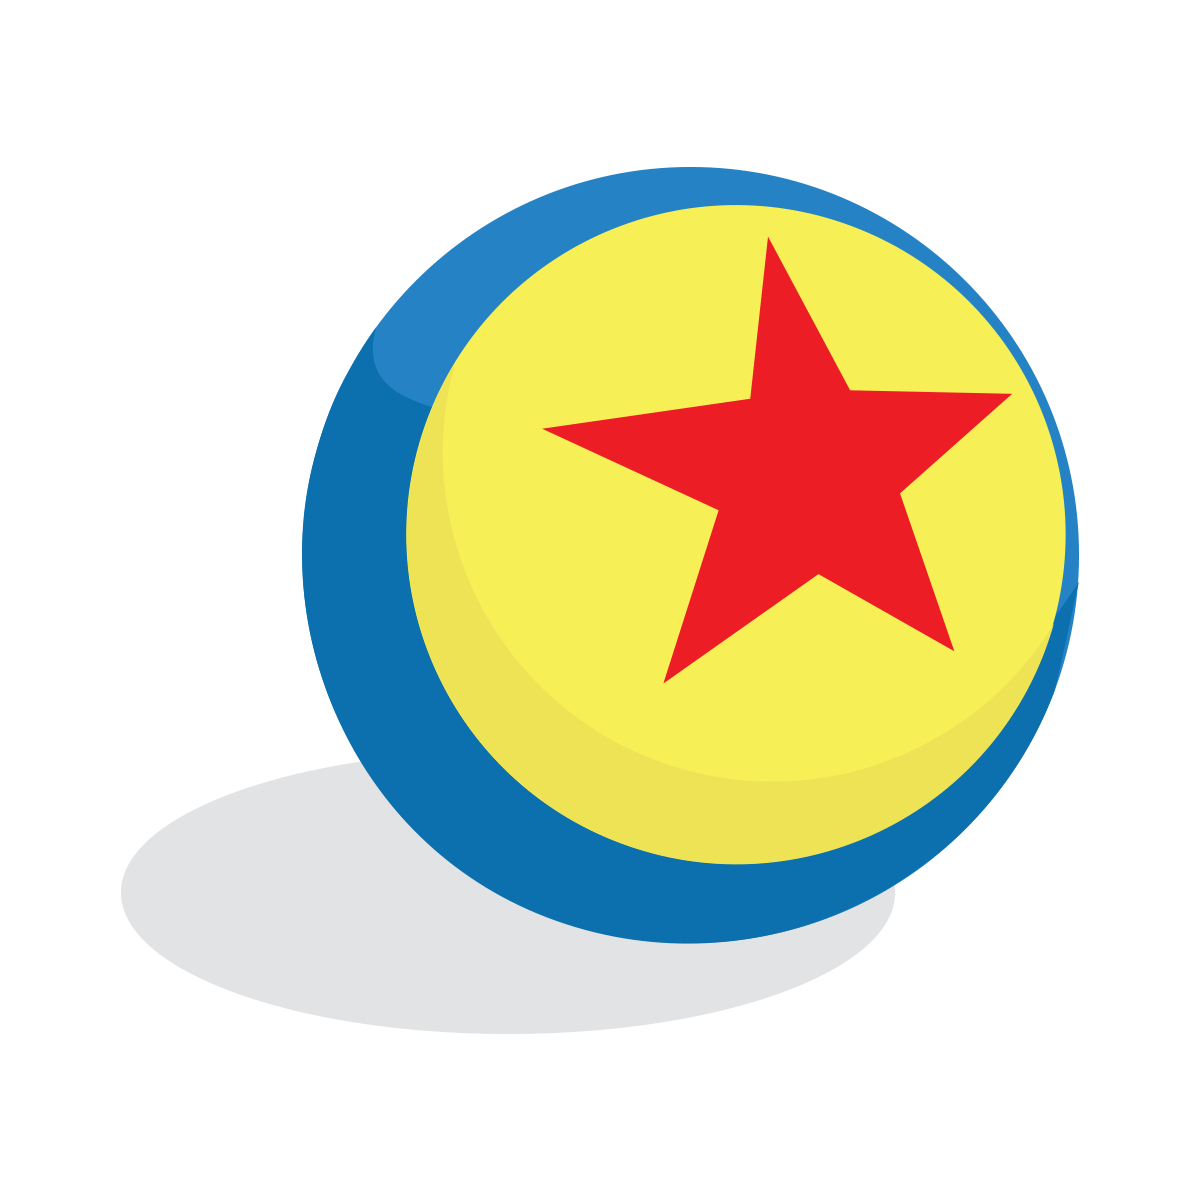 Pixar Ball Logo - Design / Logos & Vectors by Christian Vargas at Coroflot.com